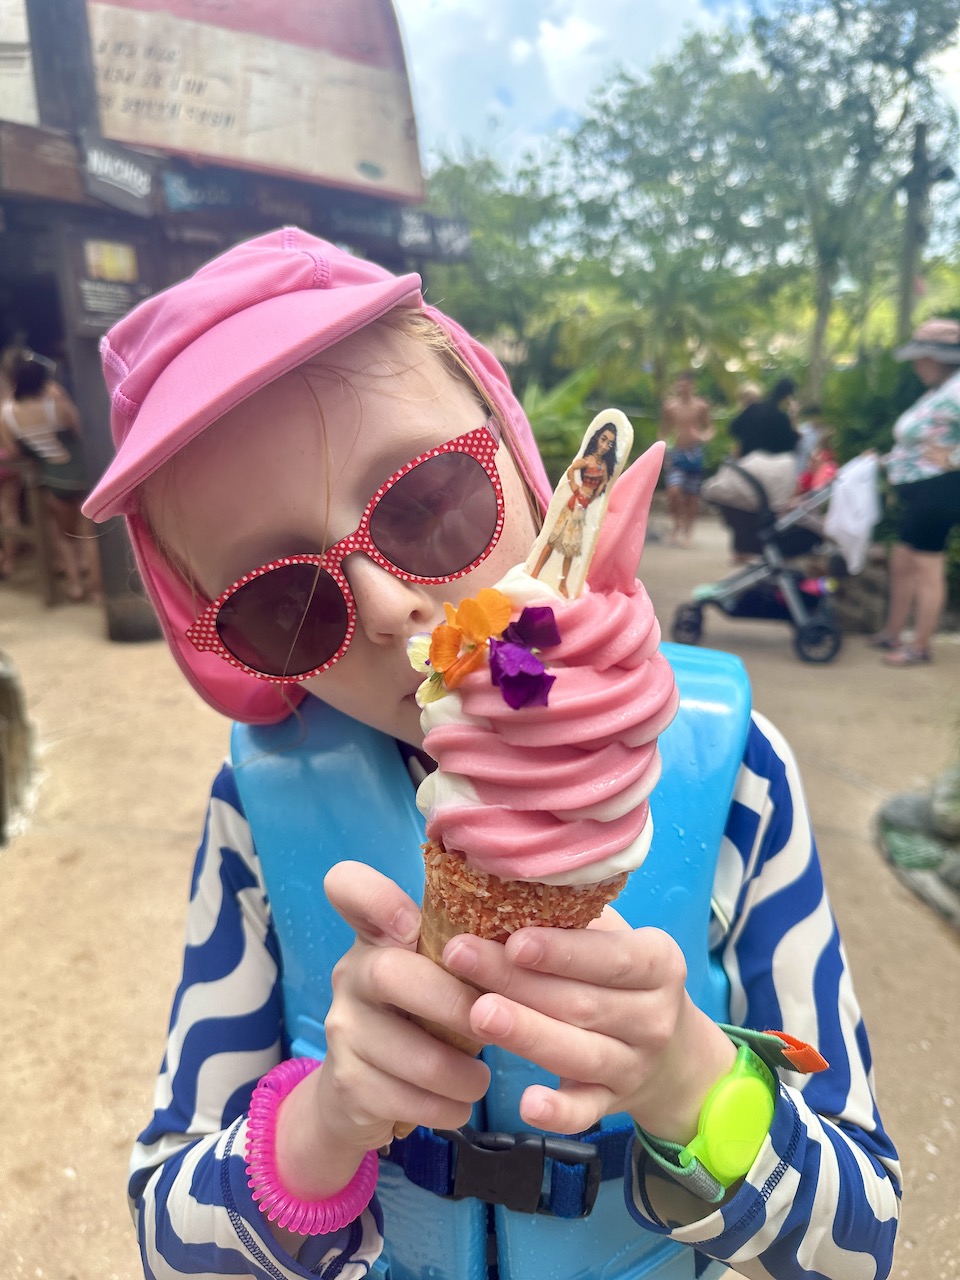 Girl eating pink Moana dole whip ice cream at Typhoon Lagoon waterpark at Disney World - 14 days Orlando itinerary.